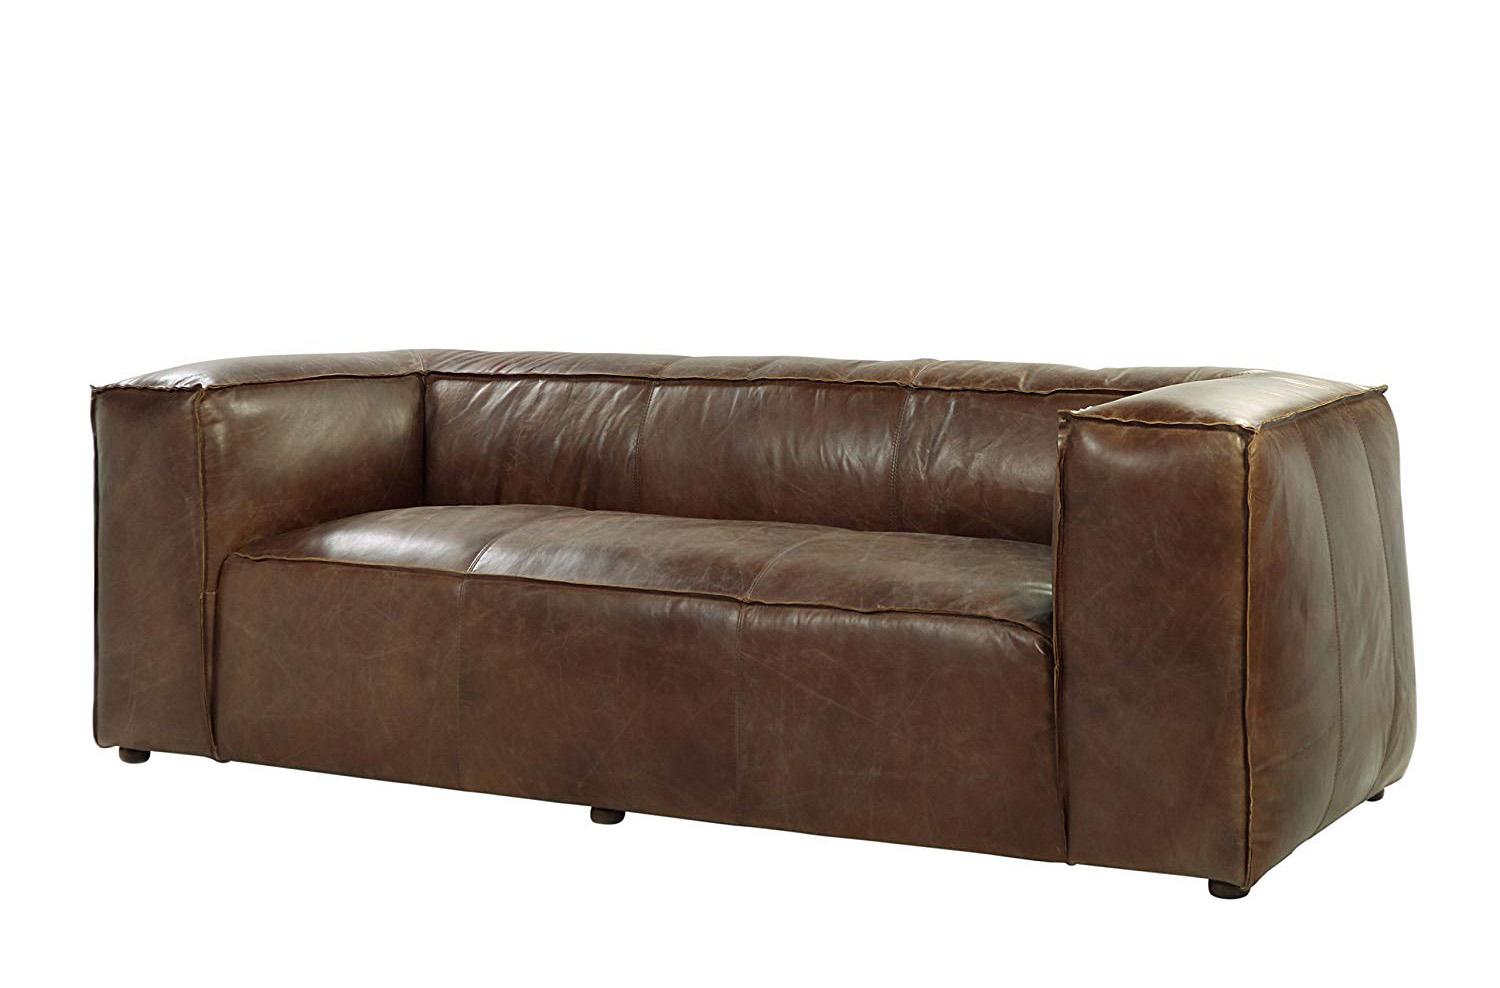 

    
Industrial Vintage Brown Top Grain Leather Sofa Acme Brancaster 53545
